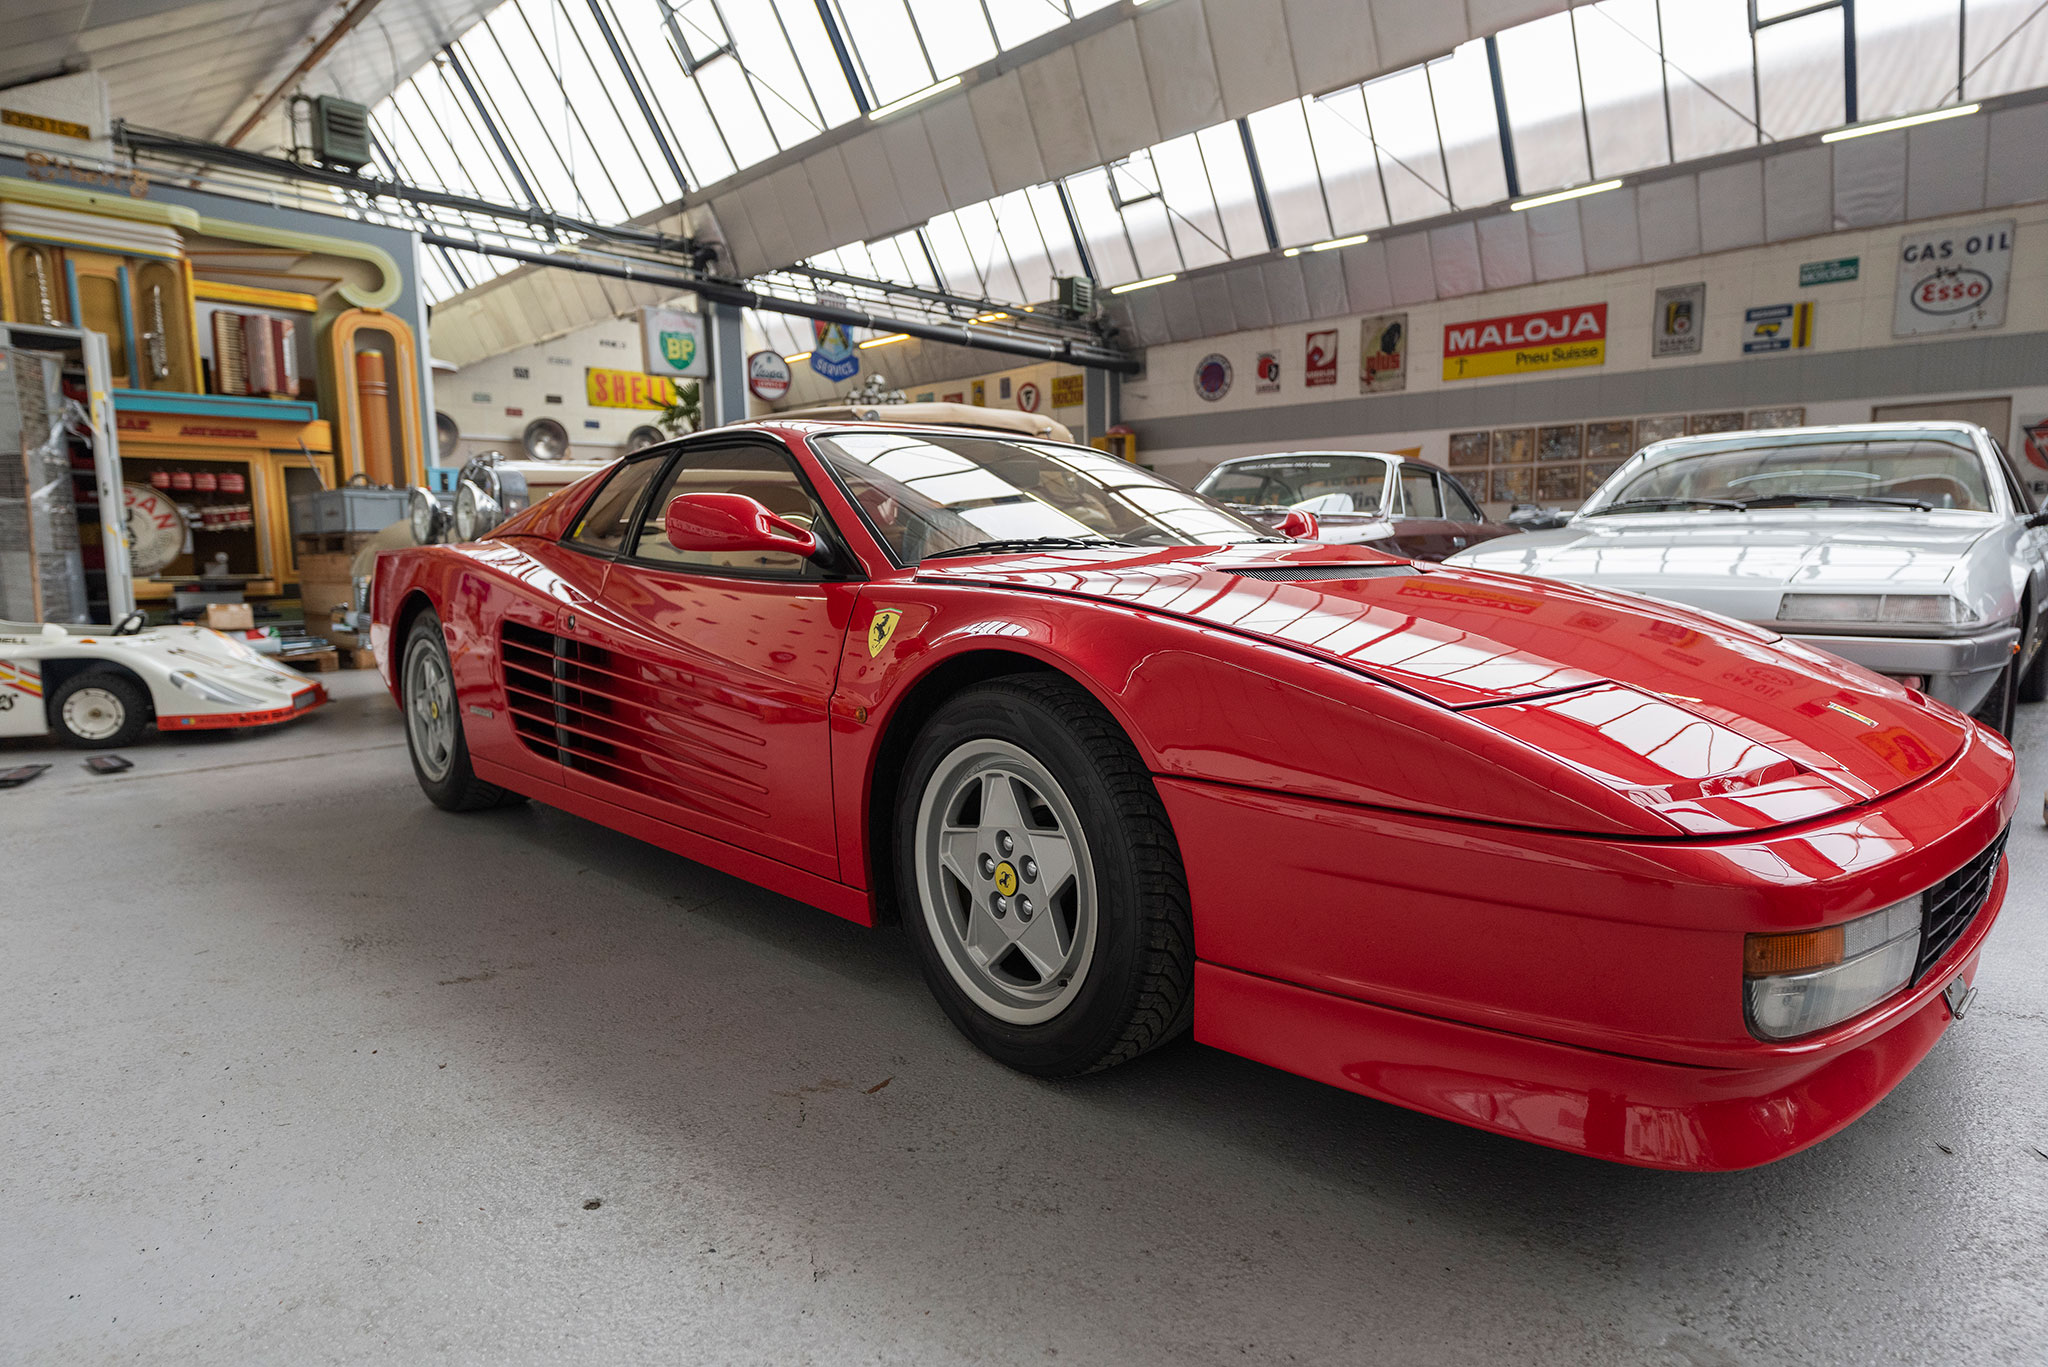 1991 Ferrari Testarossa CHF 135'000 hors frais - Gstaad 2021.